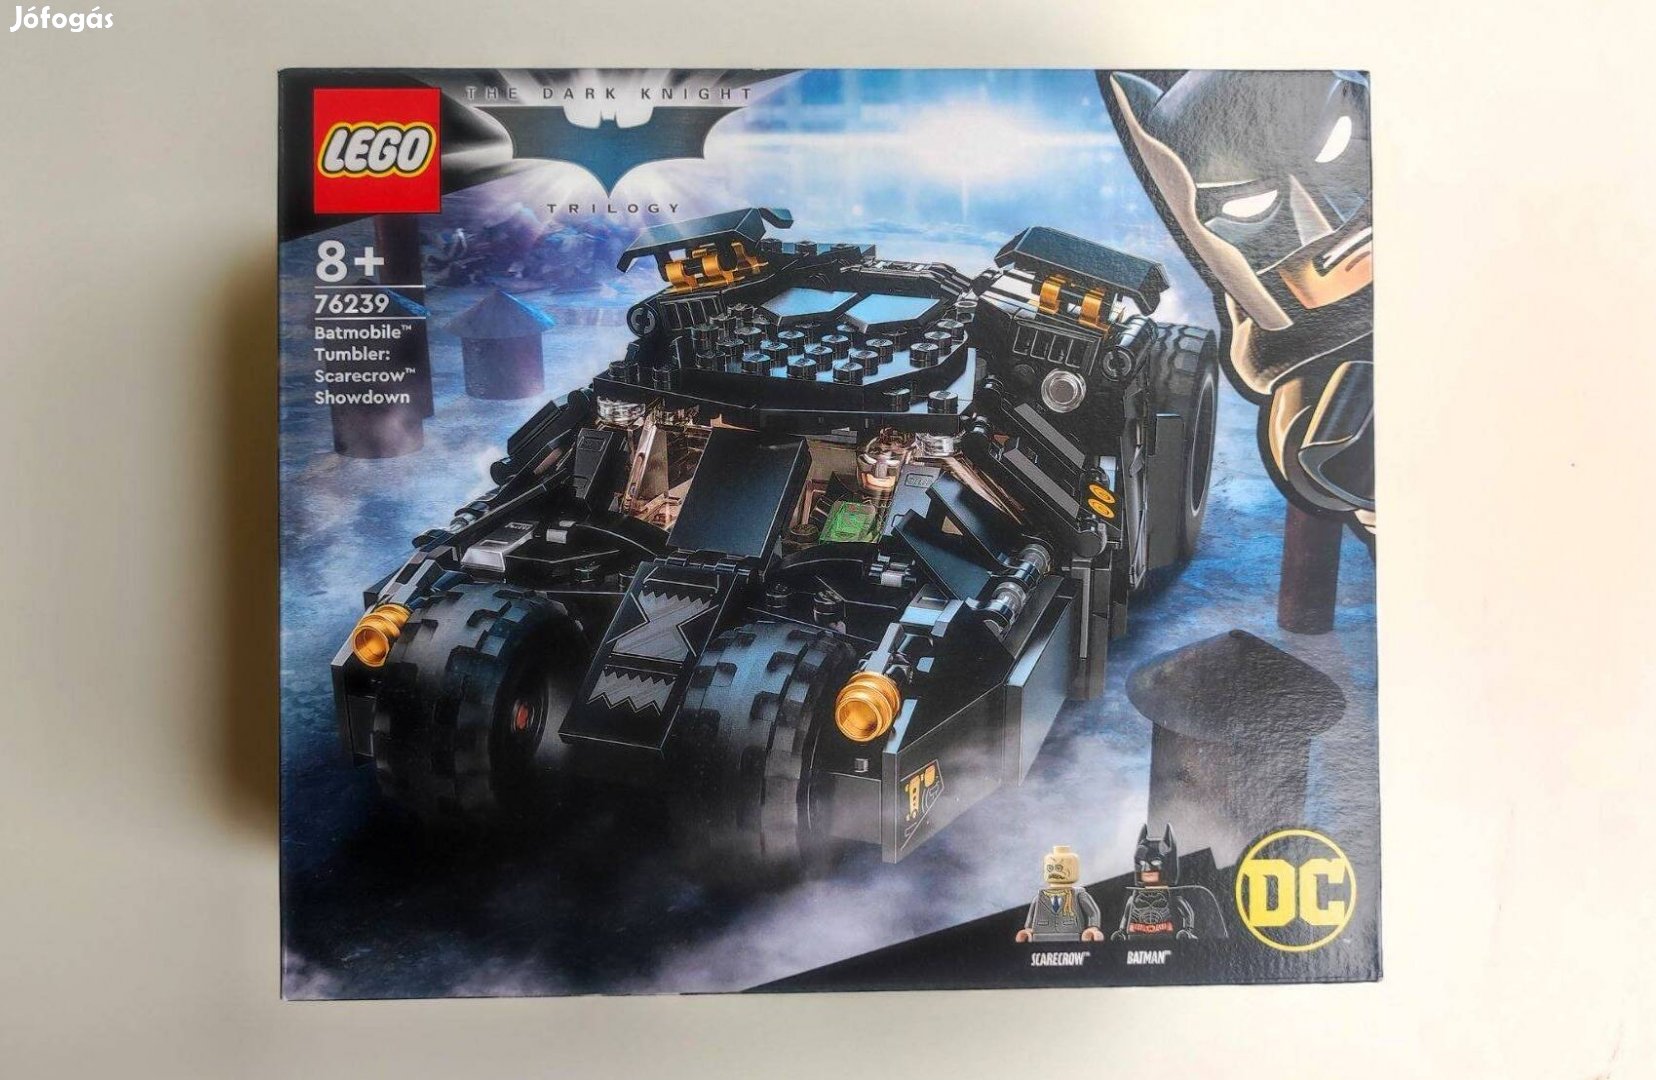 Lego 76239 /Batman/ Batmobile Tumbler - új, bontatlan